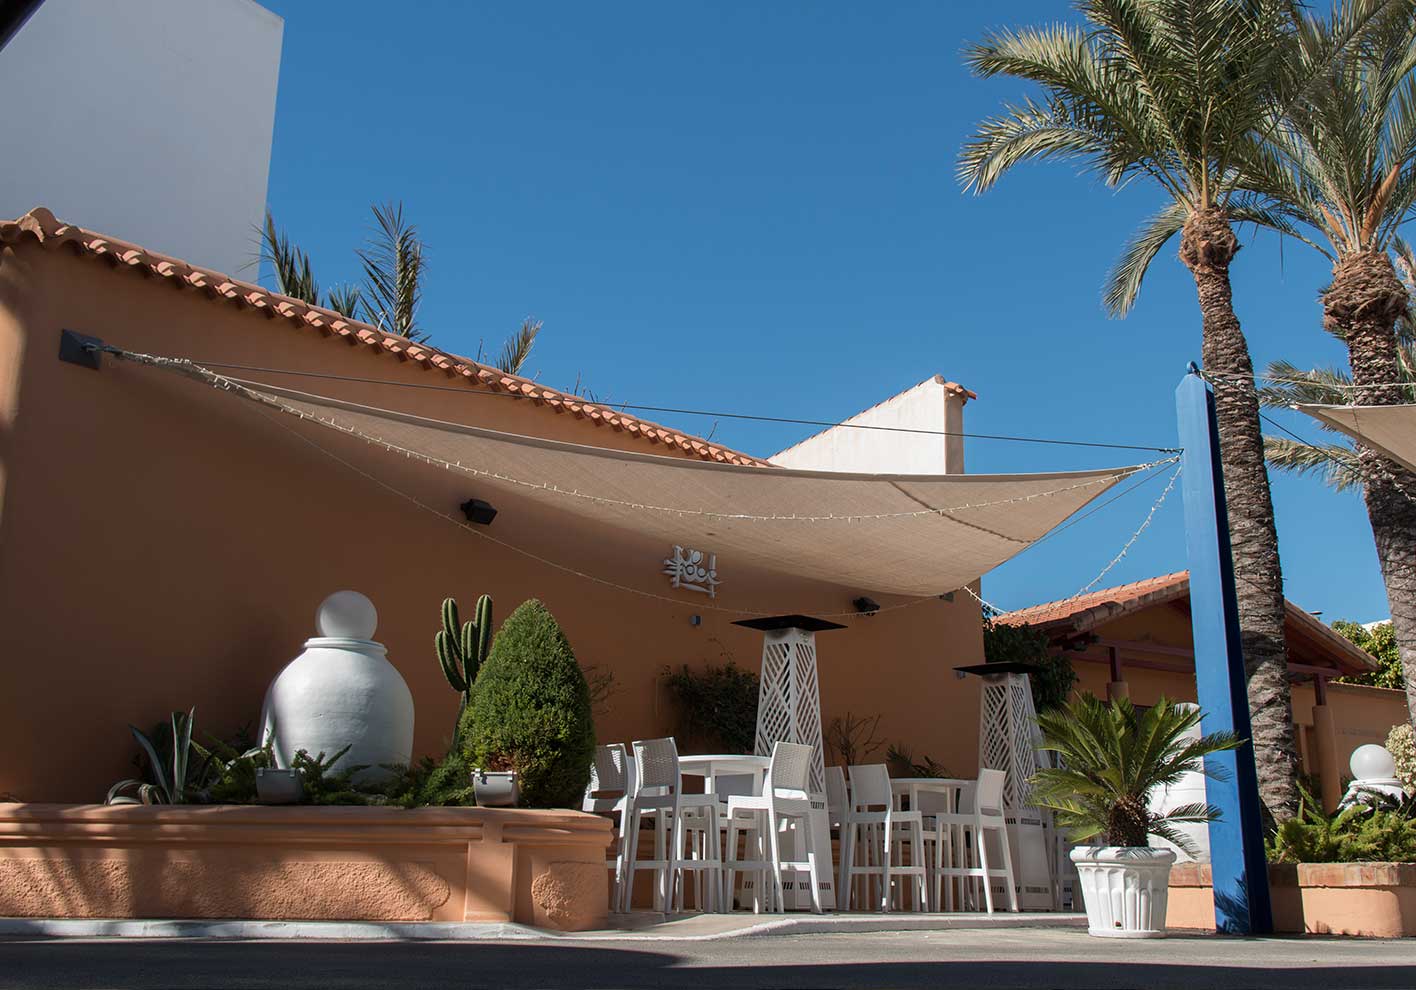 Barrel Terrace 02 - Hotel Restaurante Terraza Carmona in Vera, Almeria